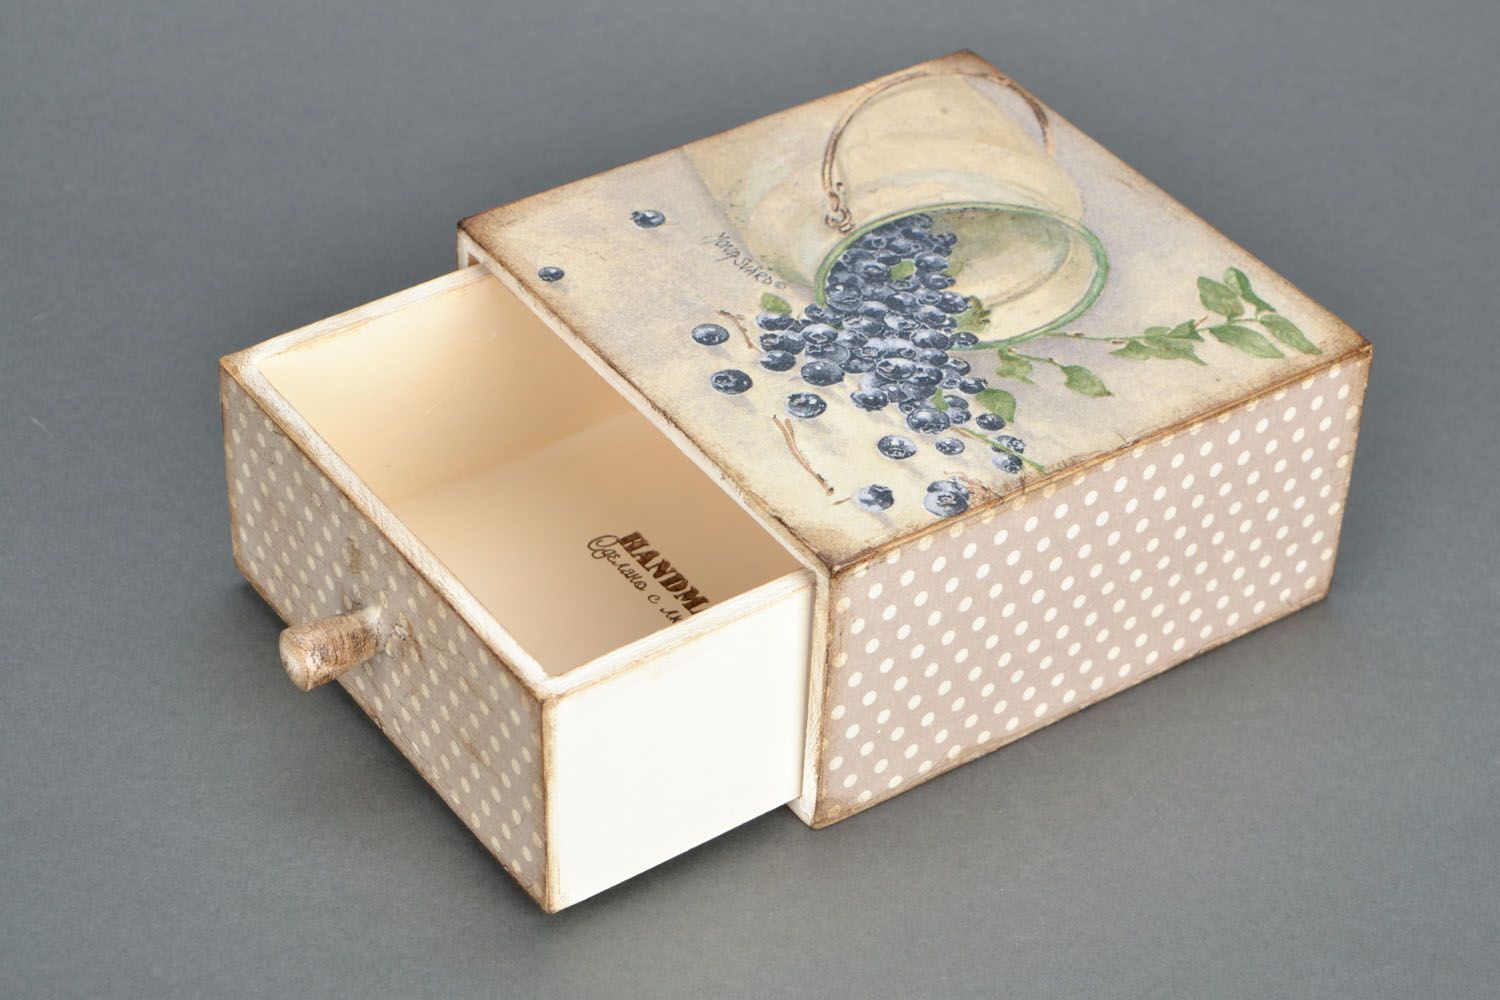 Blueberry decorative box photo 4